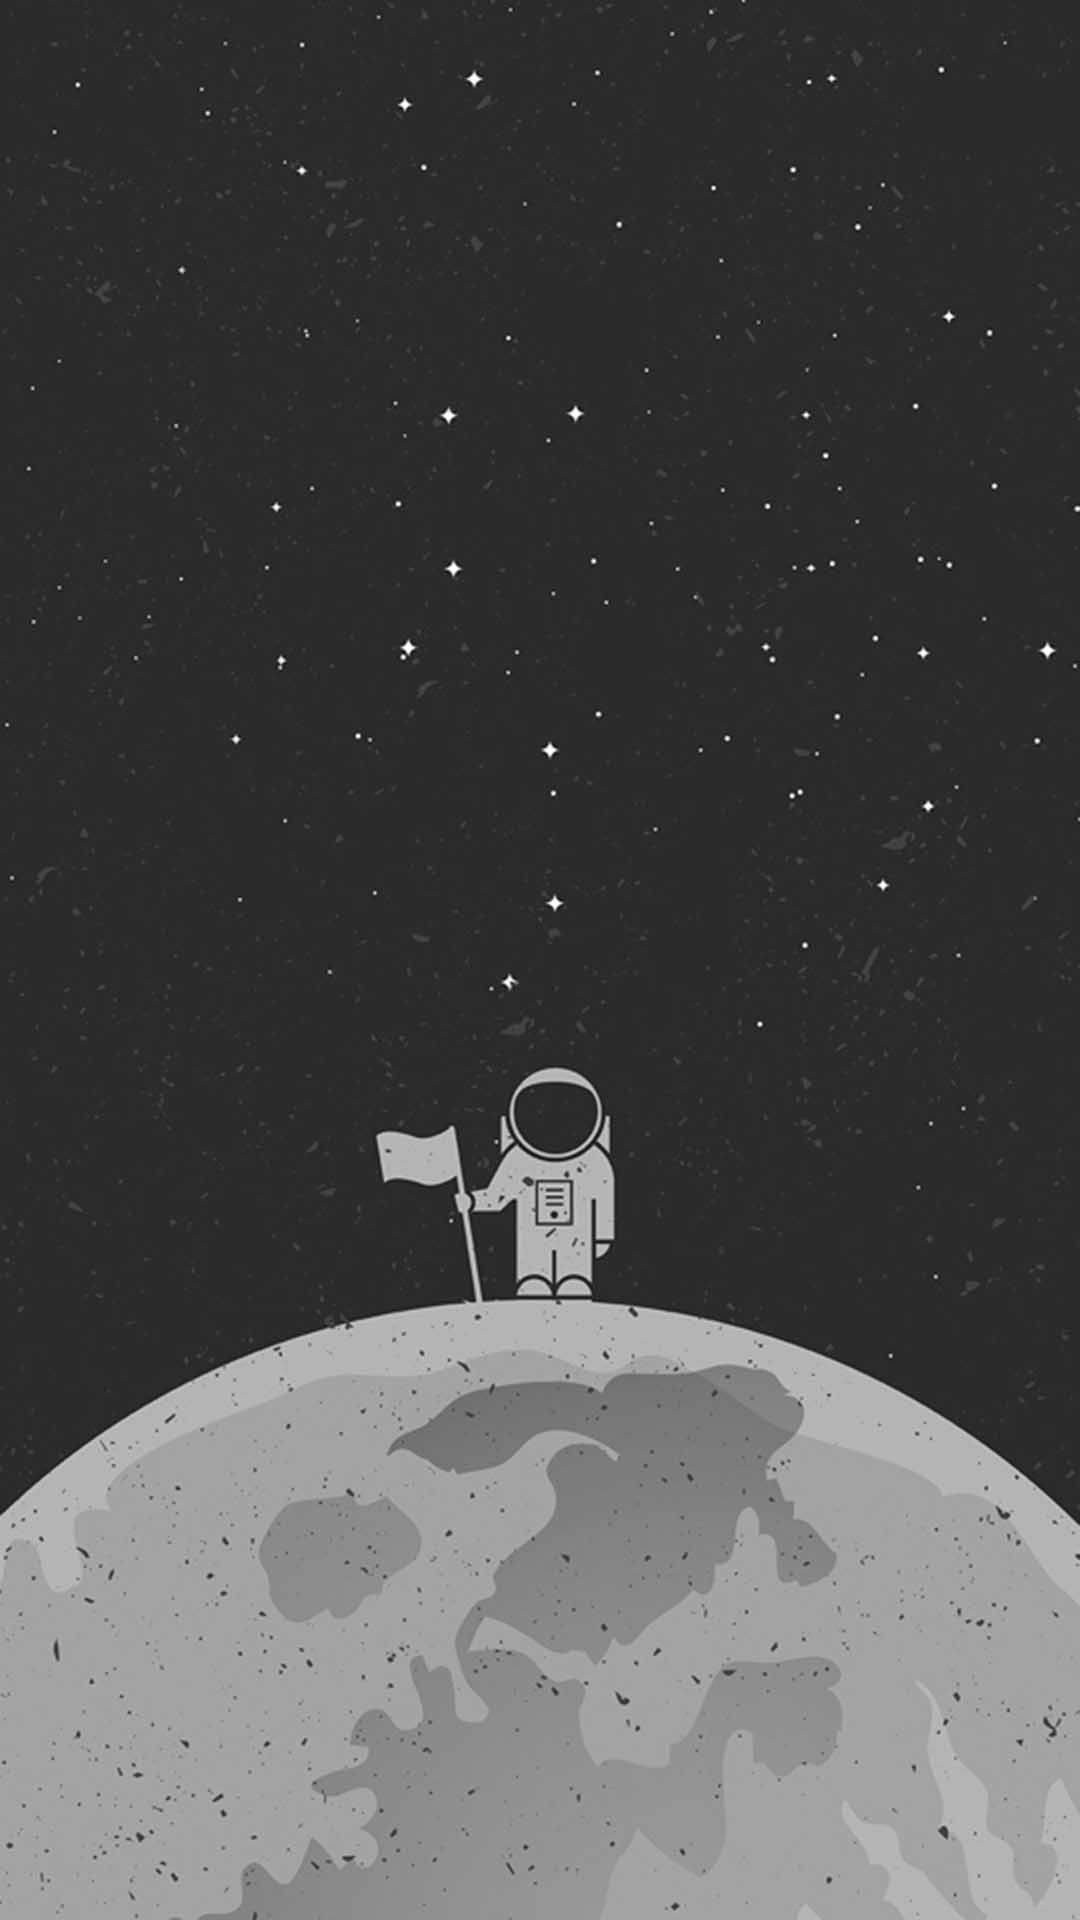 Cartoon Astronaut With A Flag Background